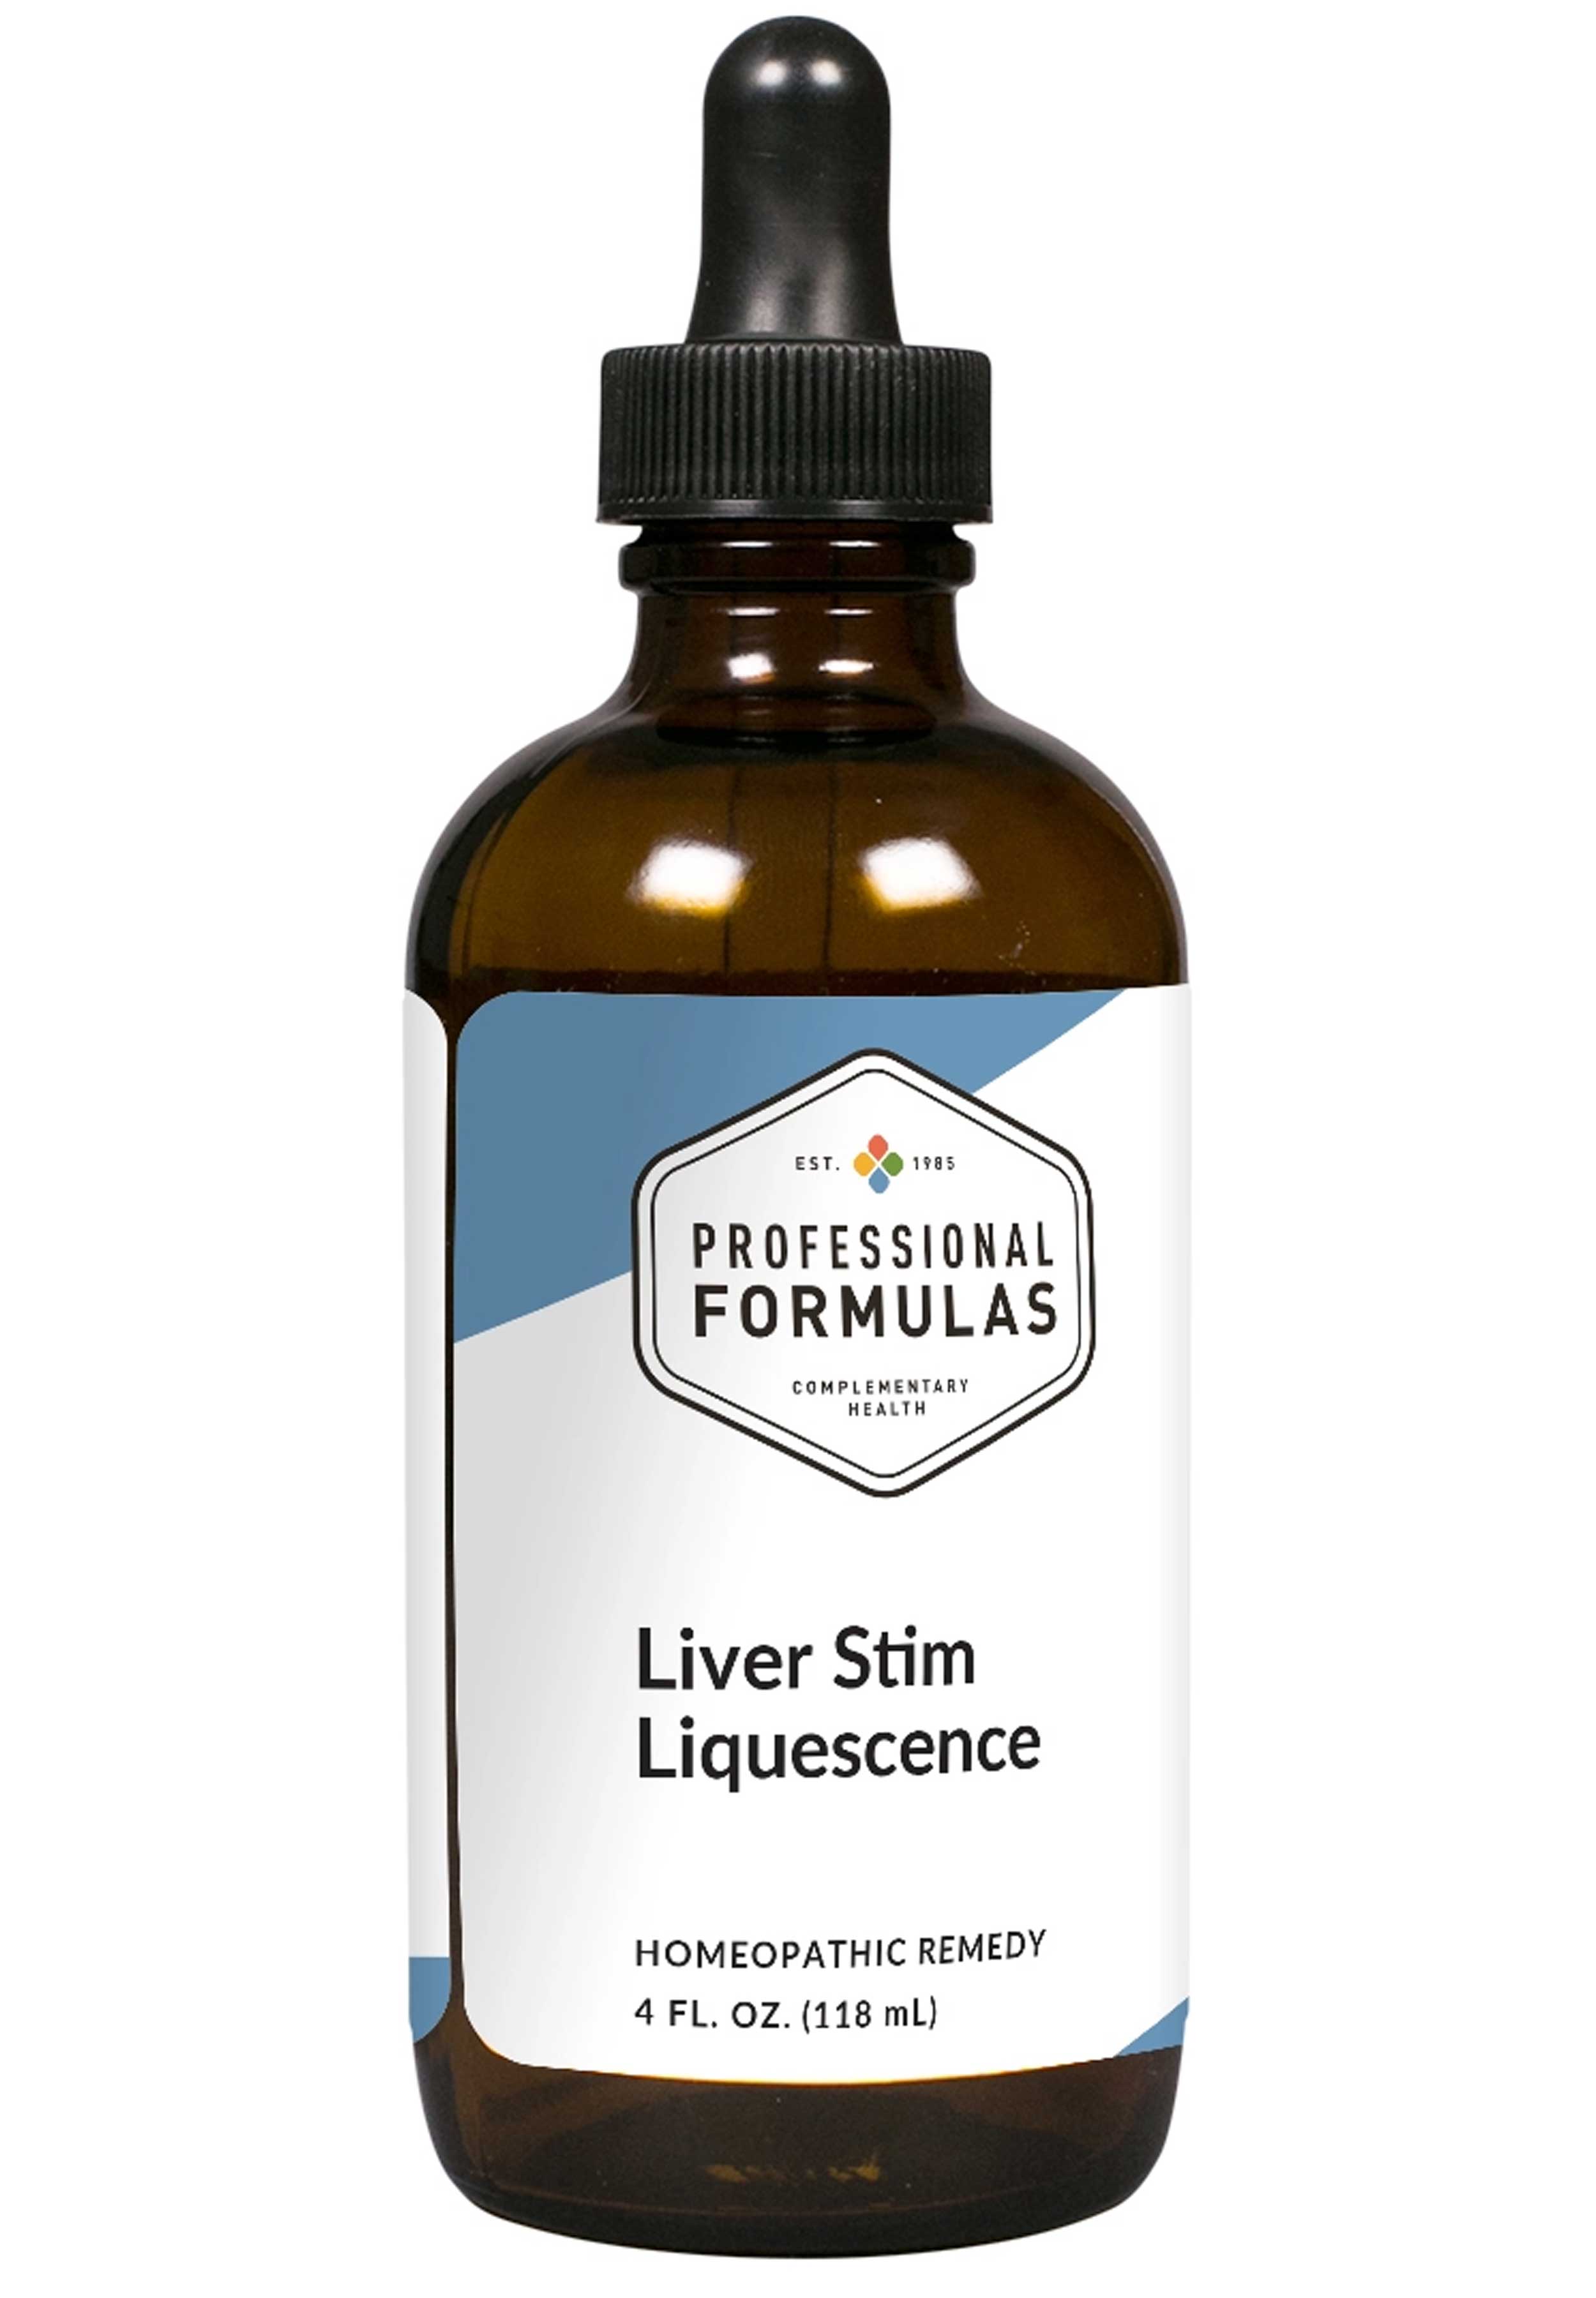 Professional Formulas Liver Stim Liquescence